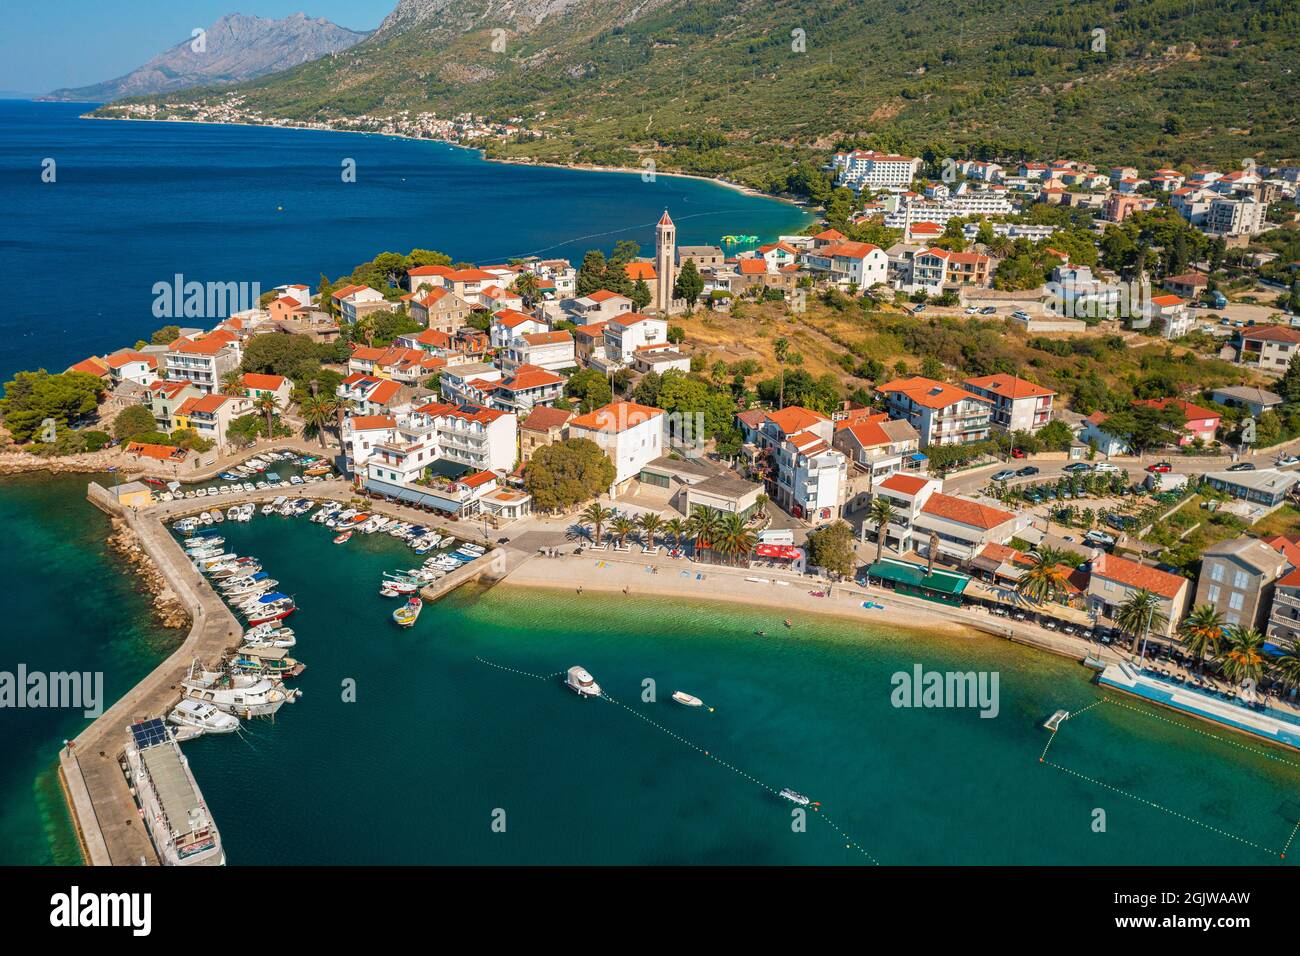 Aerial view of Gradac town below Biokovo mountain, the Adriatic Sea, Croatia Stock Photo